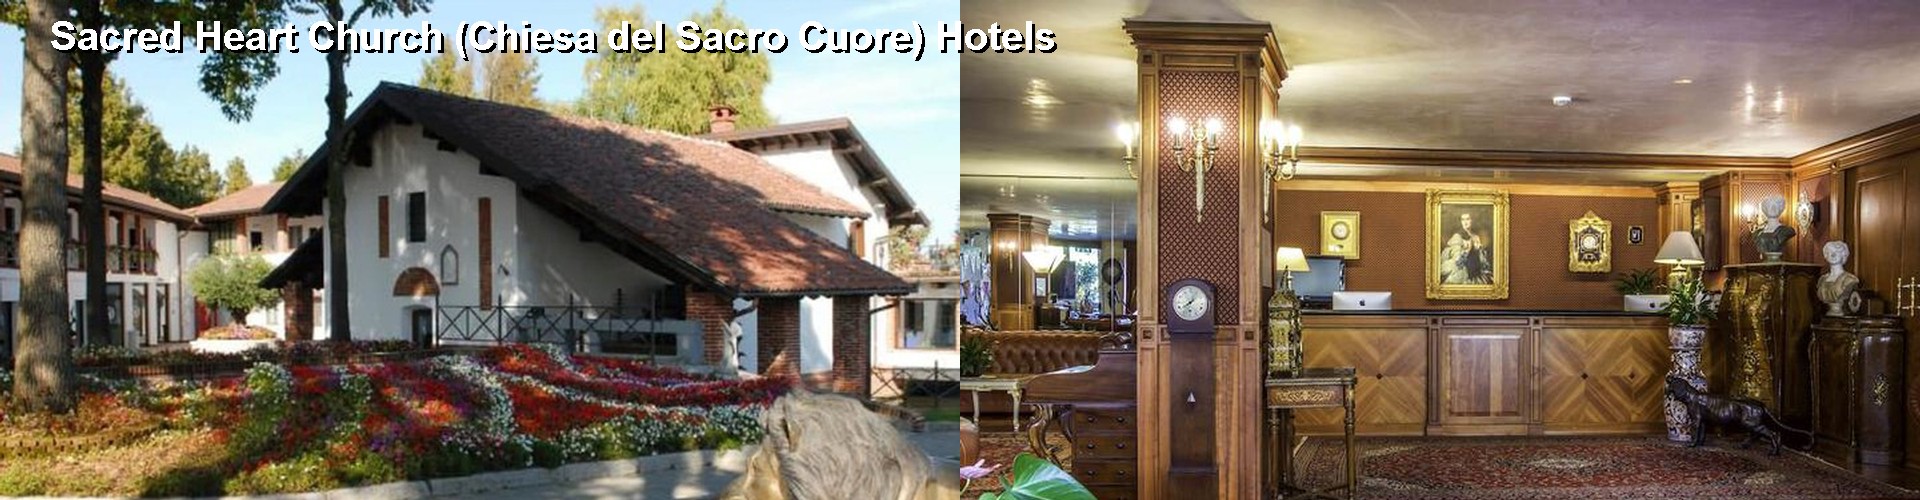 5 Best Hotels near Sacred Heart Church (Chiesa del Sacro Cuore)